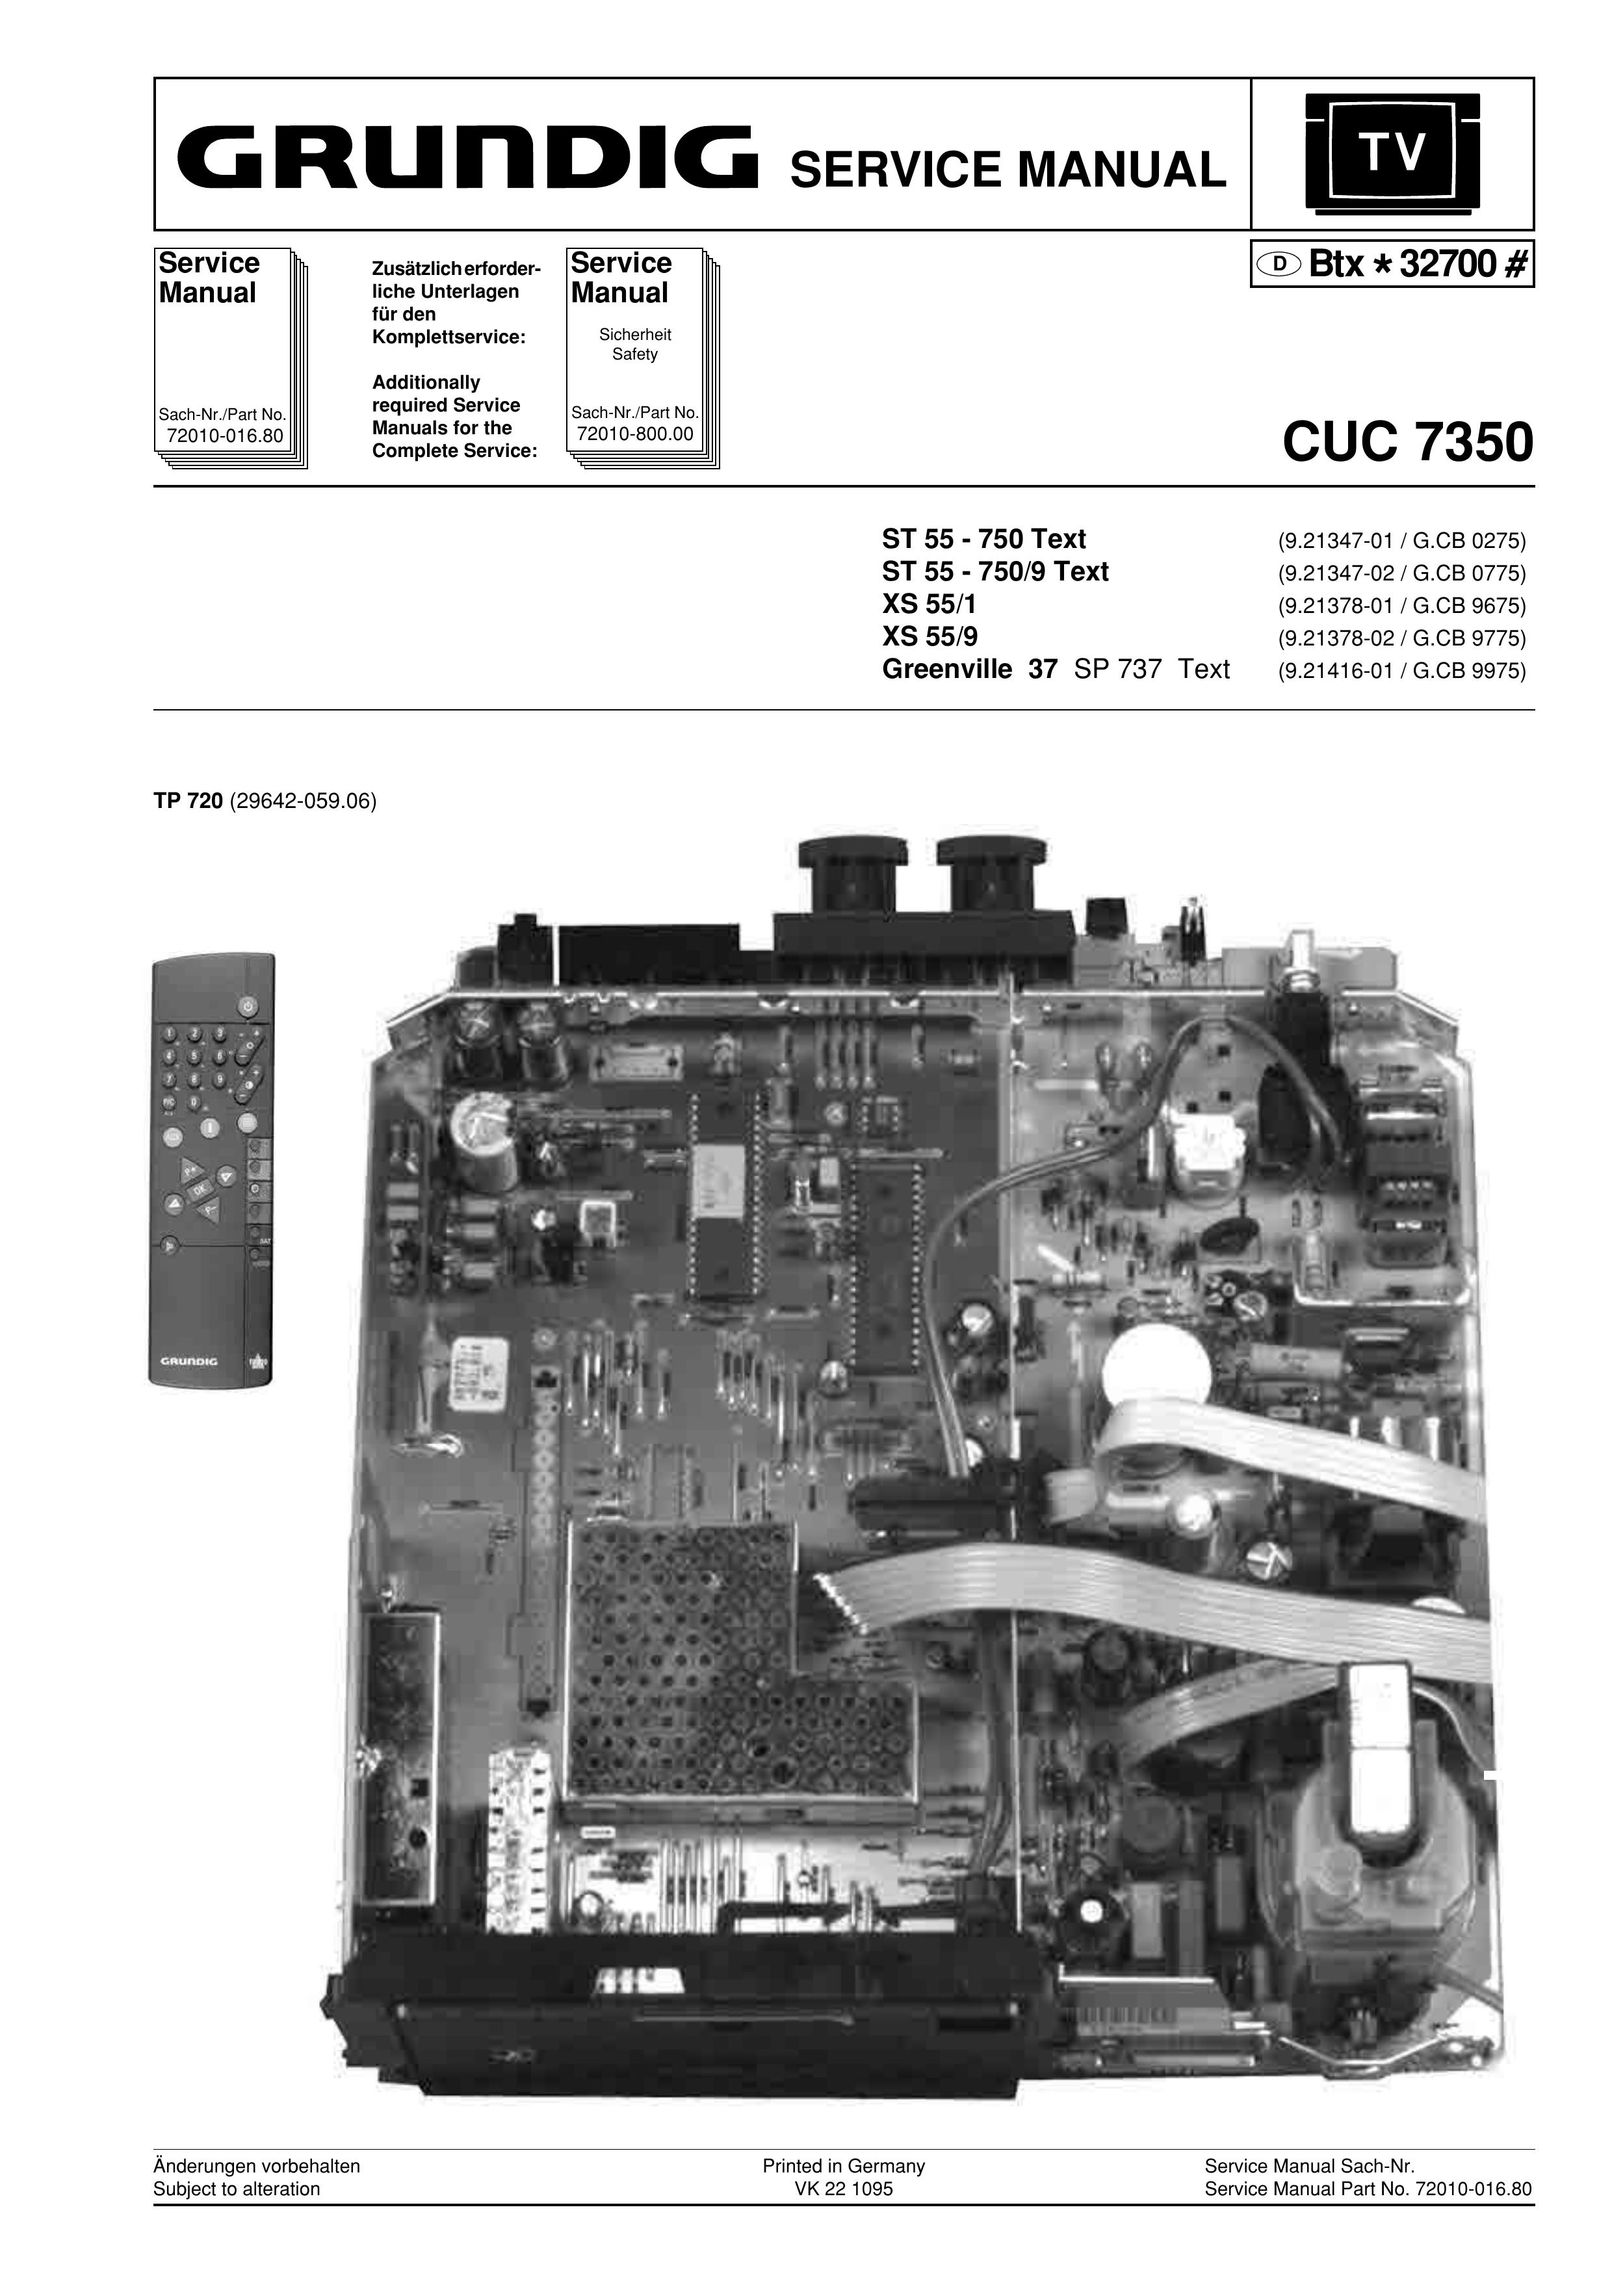 Grundig CUC 7350 Network Card User Manual (Page 1)